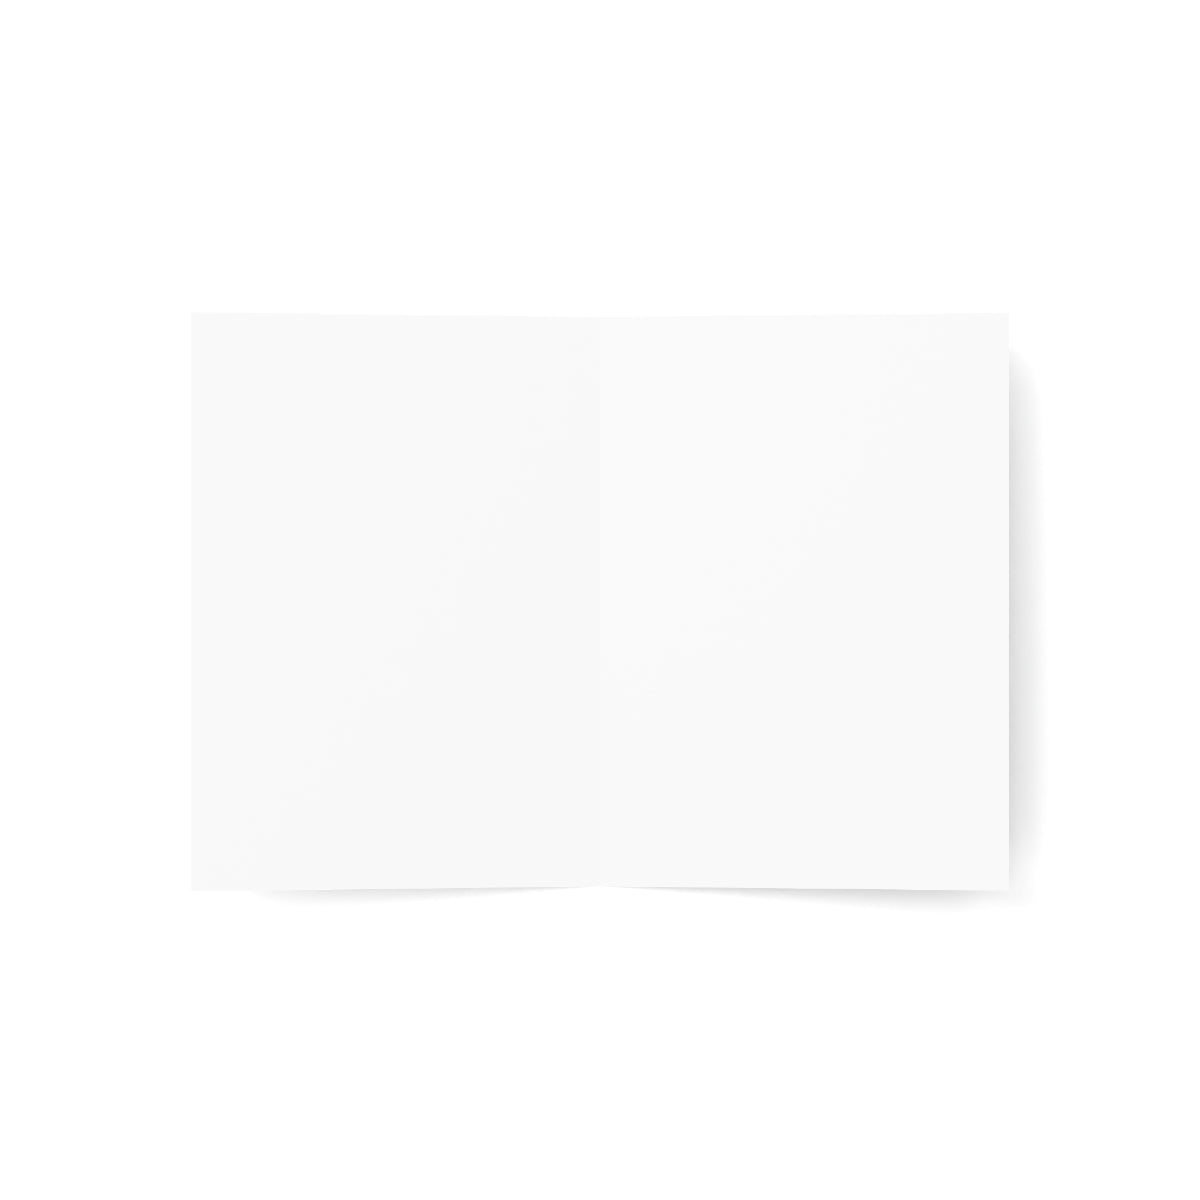 Miami Beach Folded Matte Notecards + Envelopes (10pcs)